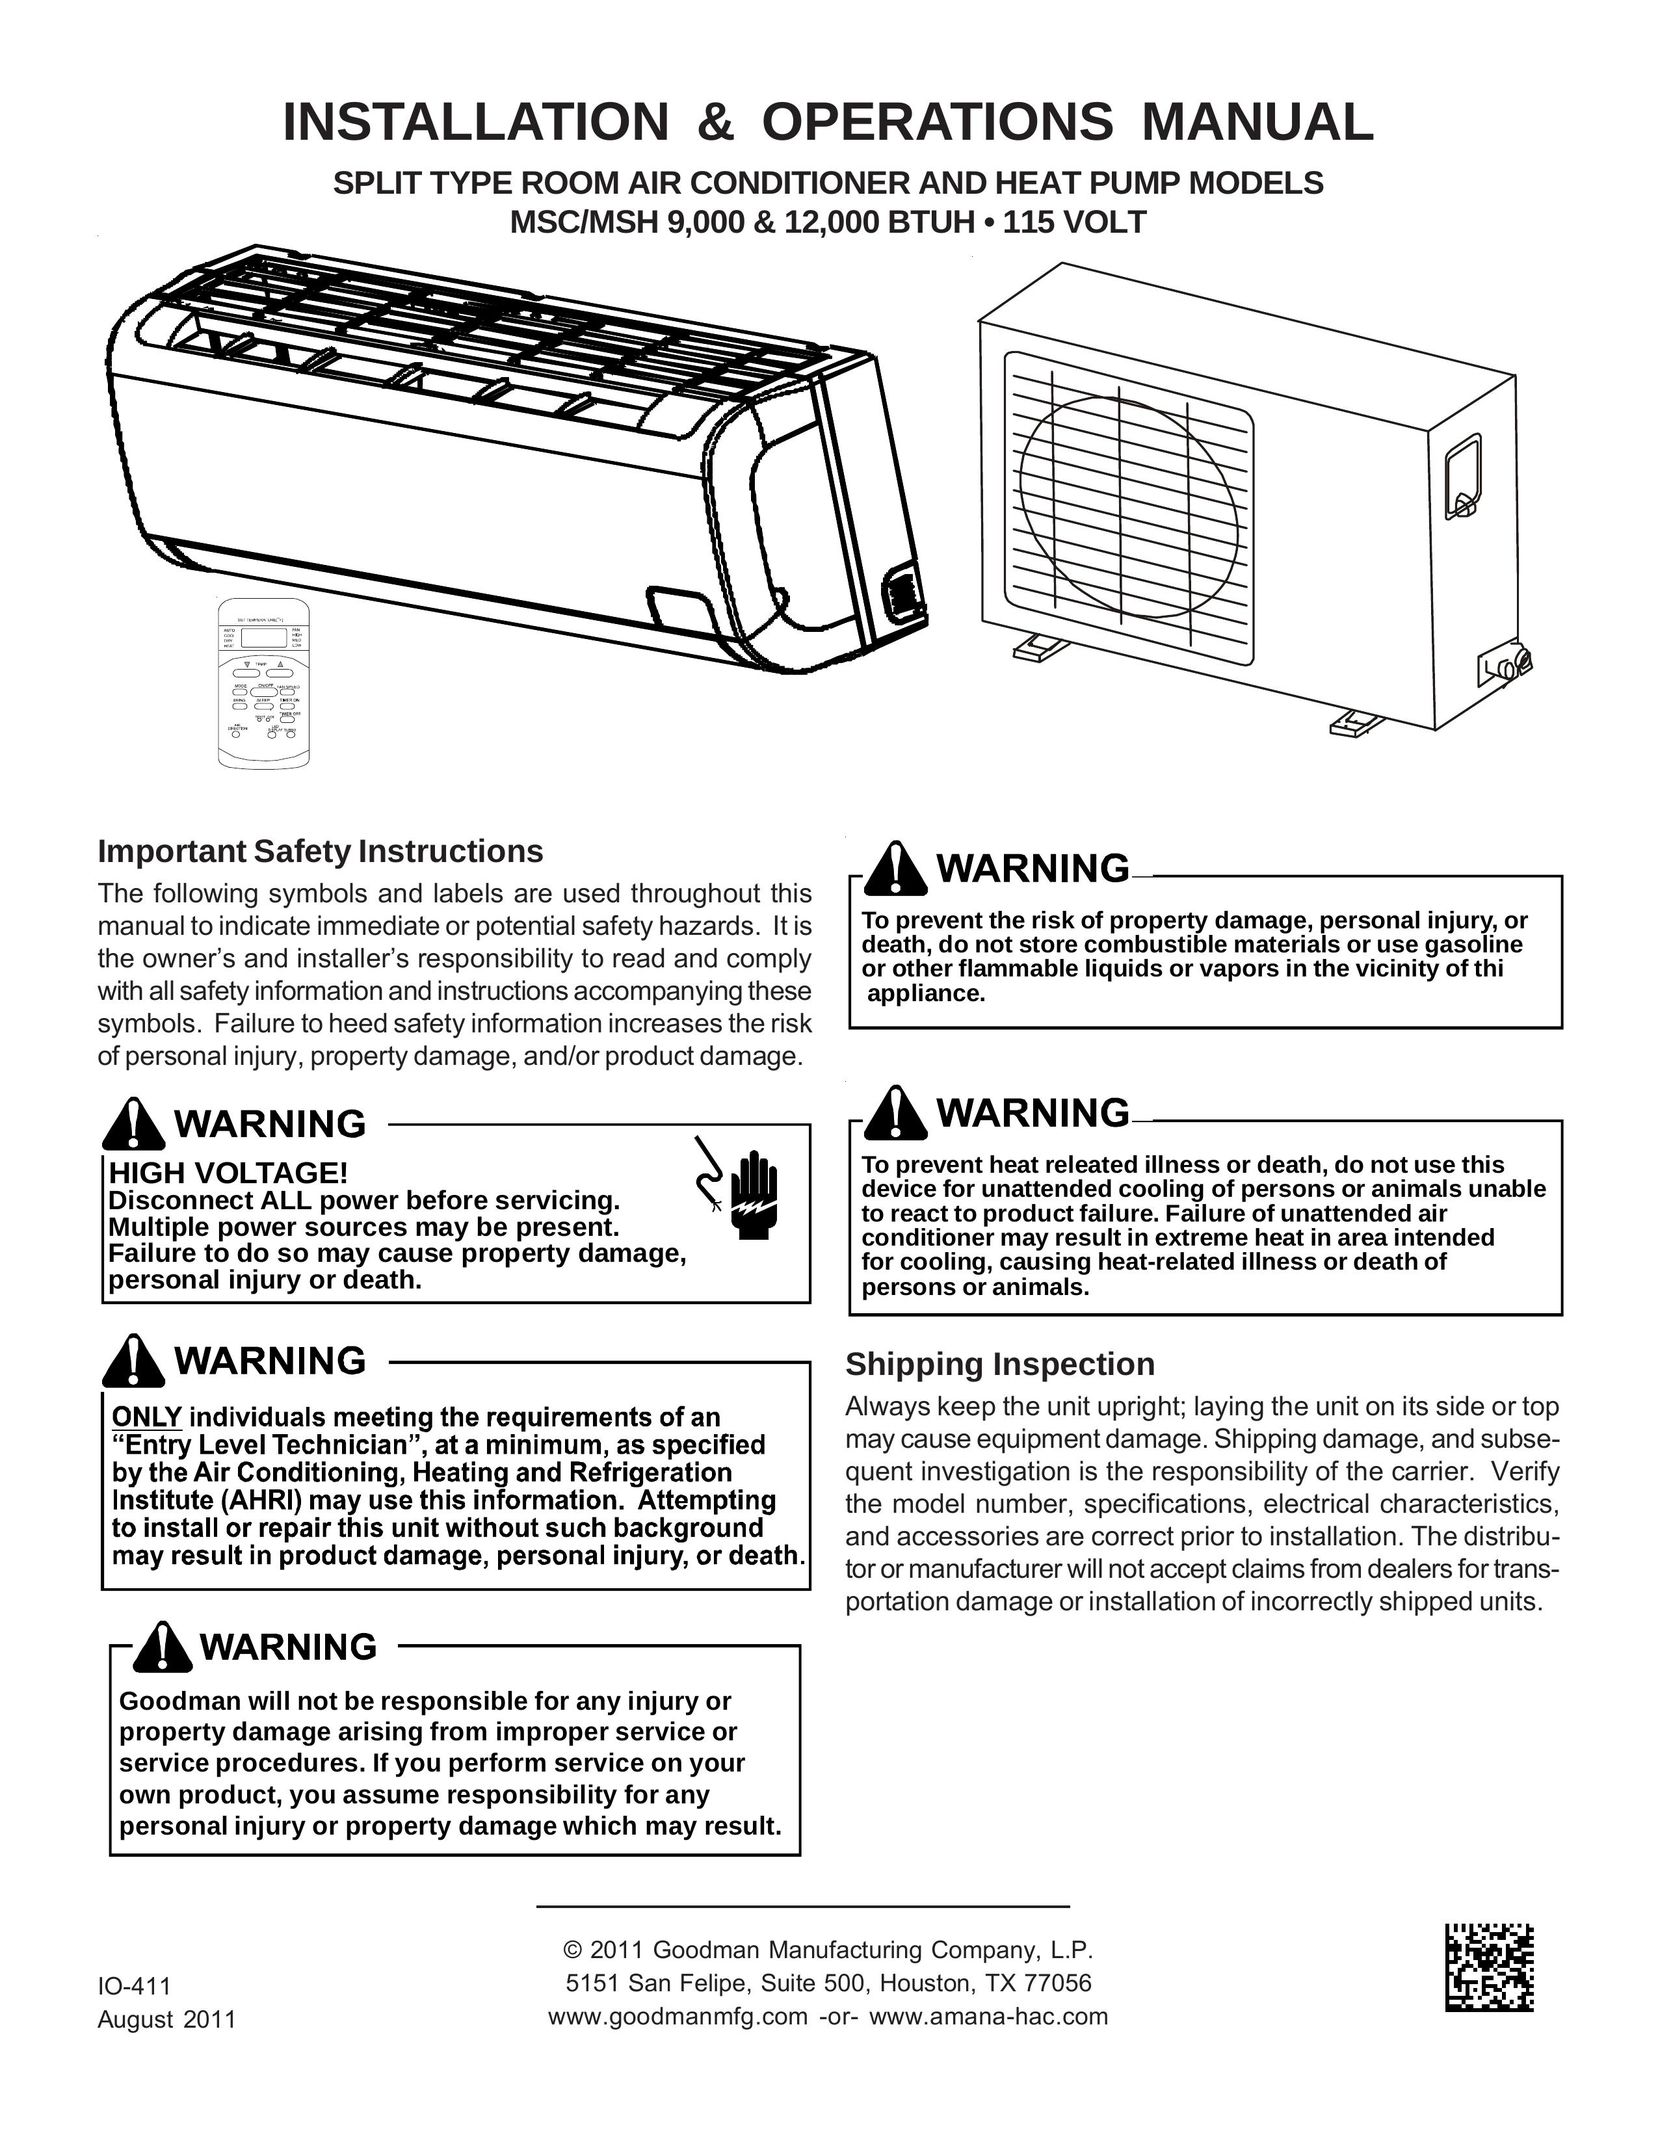 Goodman Mfg 000 &12 Air Conditioner User Manual